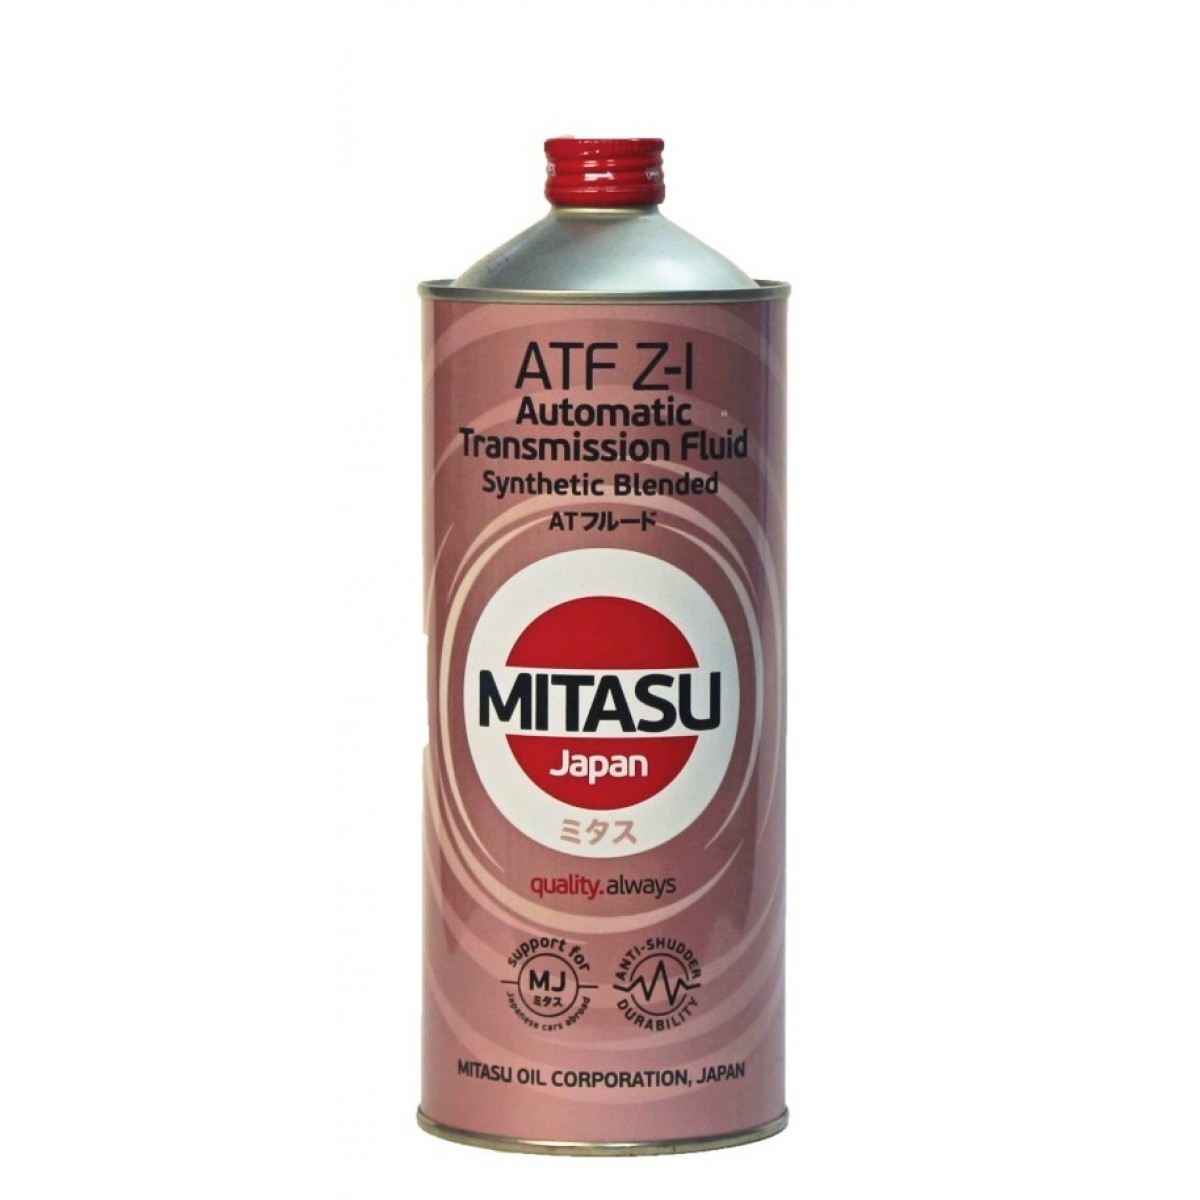 Mitasu atf. Mitasu ATF z1. Mitasu Premium Multi vehicle ATF для АКПП синт 1. Mitasu 1л. MJ-120-1.